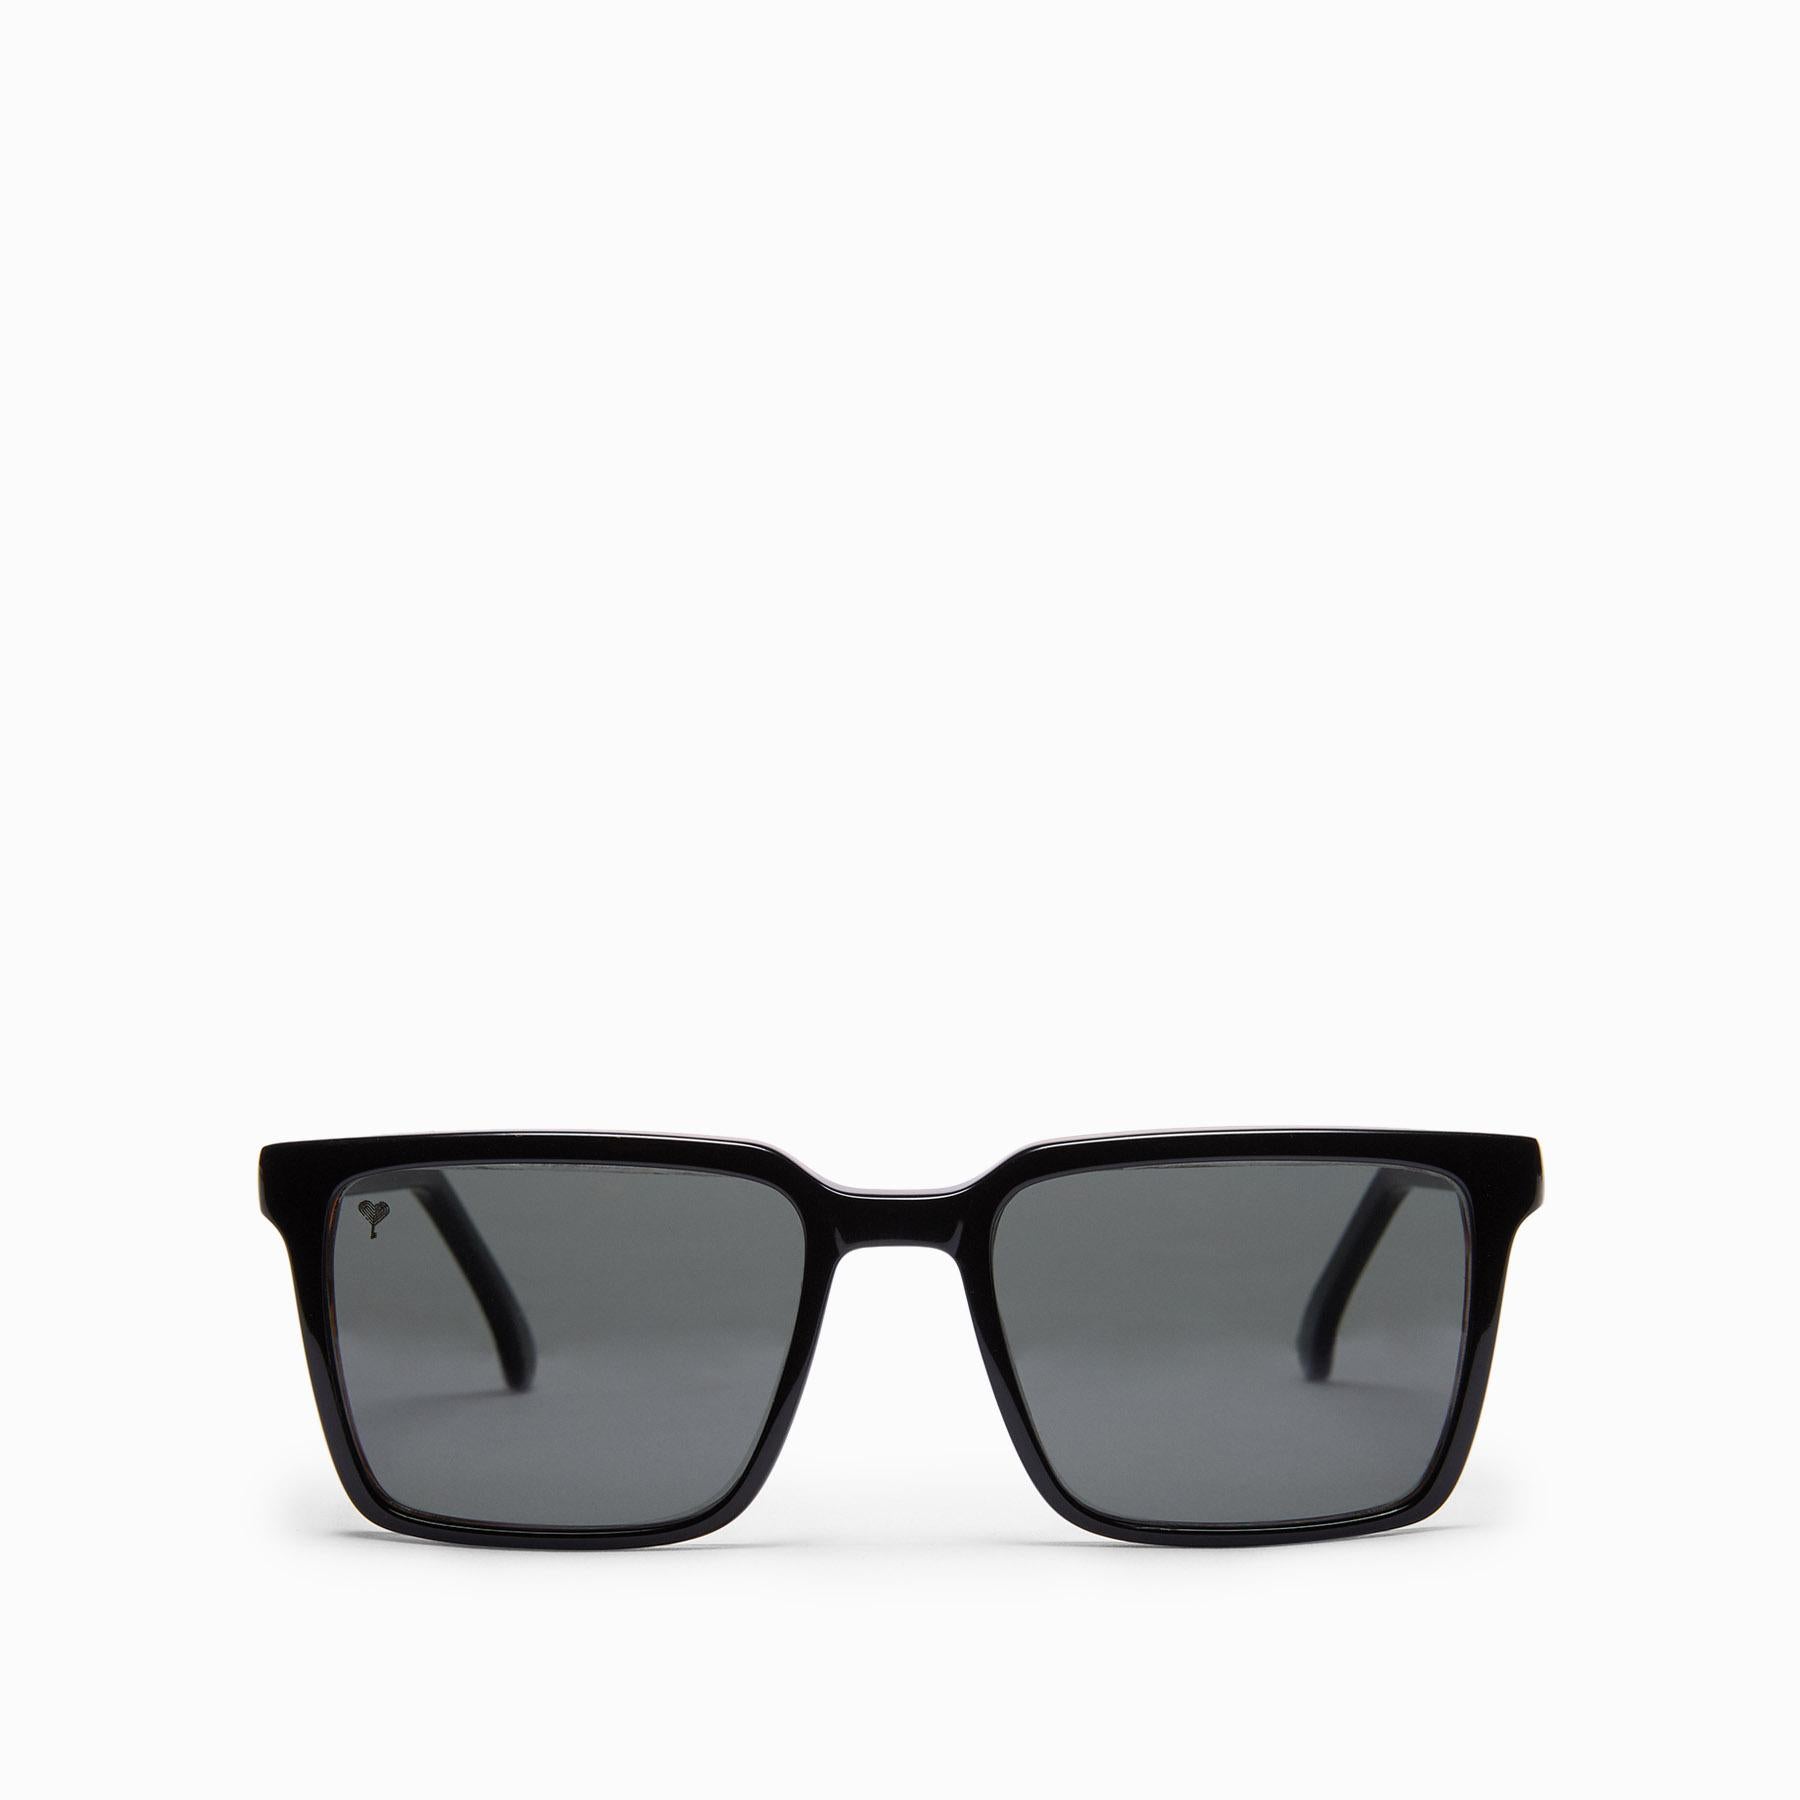 Black & Tan Square Sunglasses